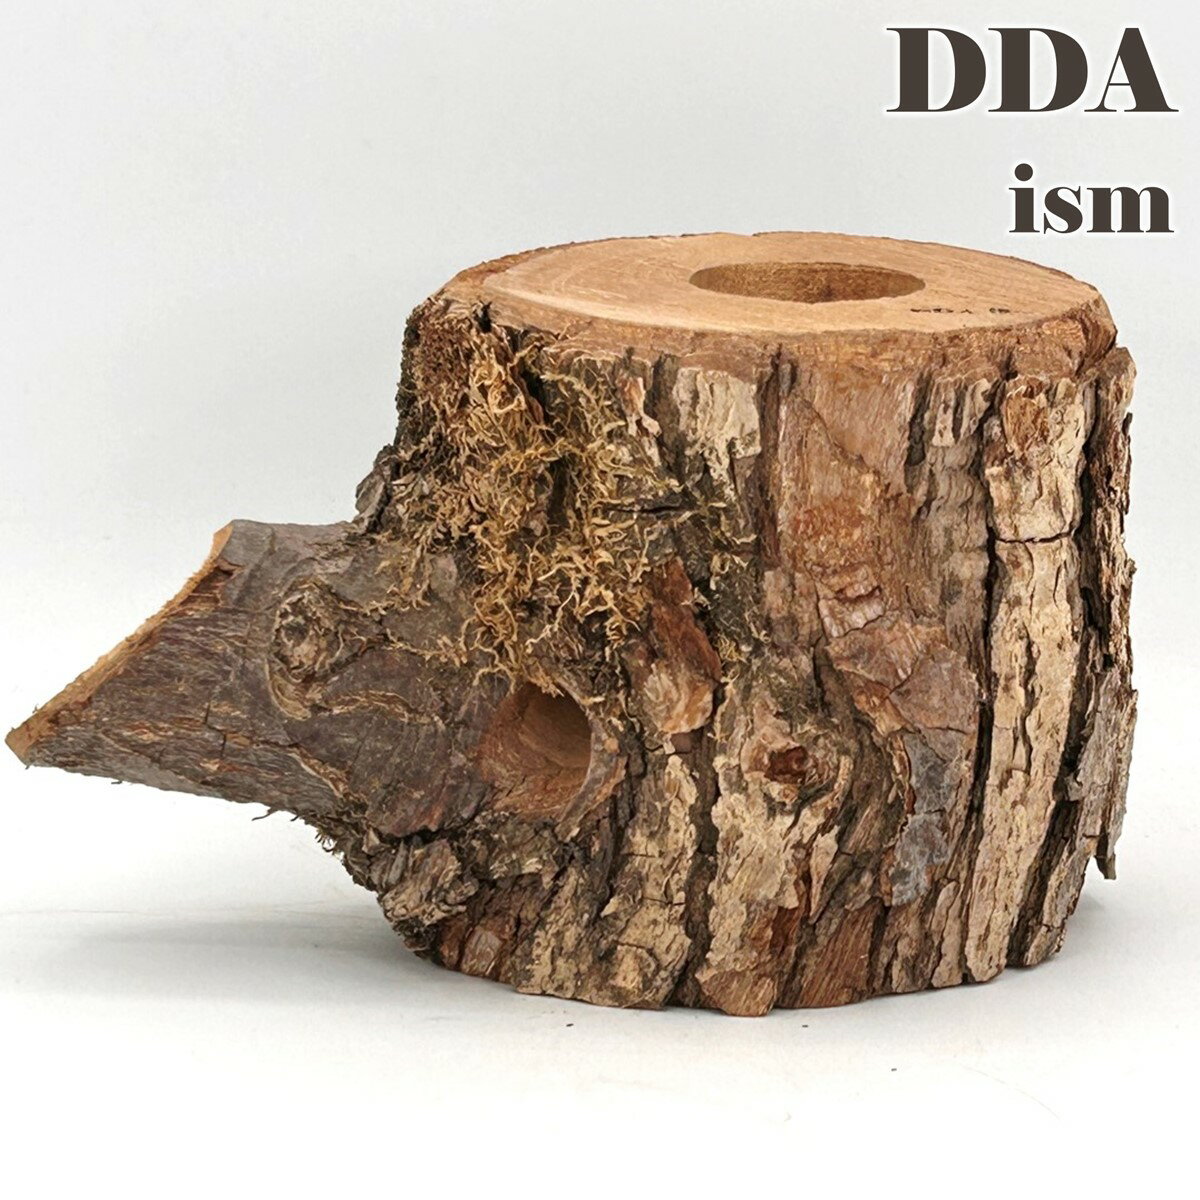 【DDA】newクラフトウッド(M) 2401121338 dda クワガタ カブトムシ えさ皿 止まり木 登り木